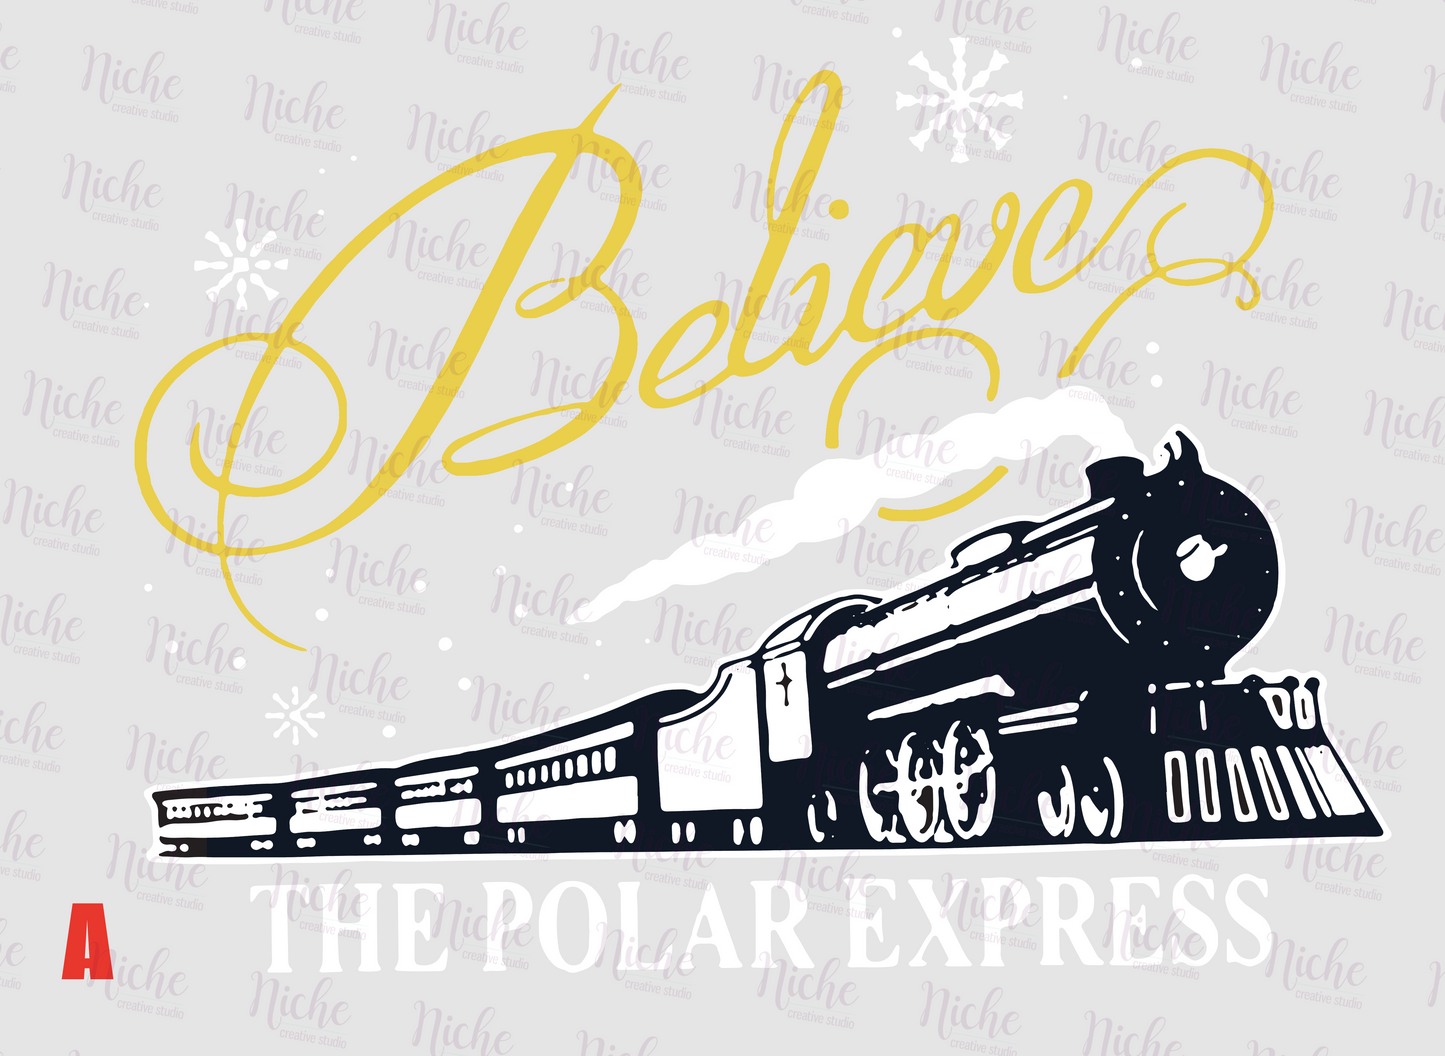 -CHR1139 Polar Express Train Decal